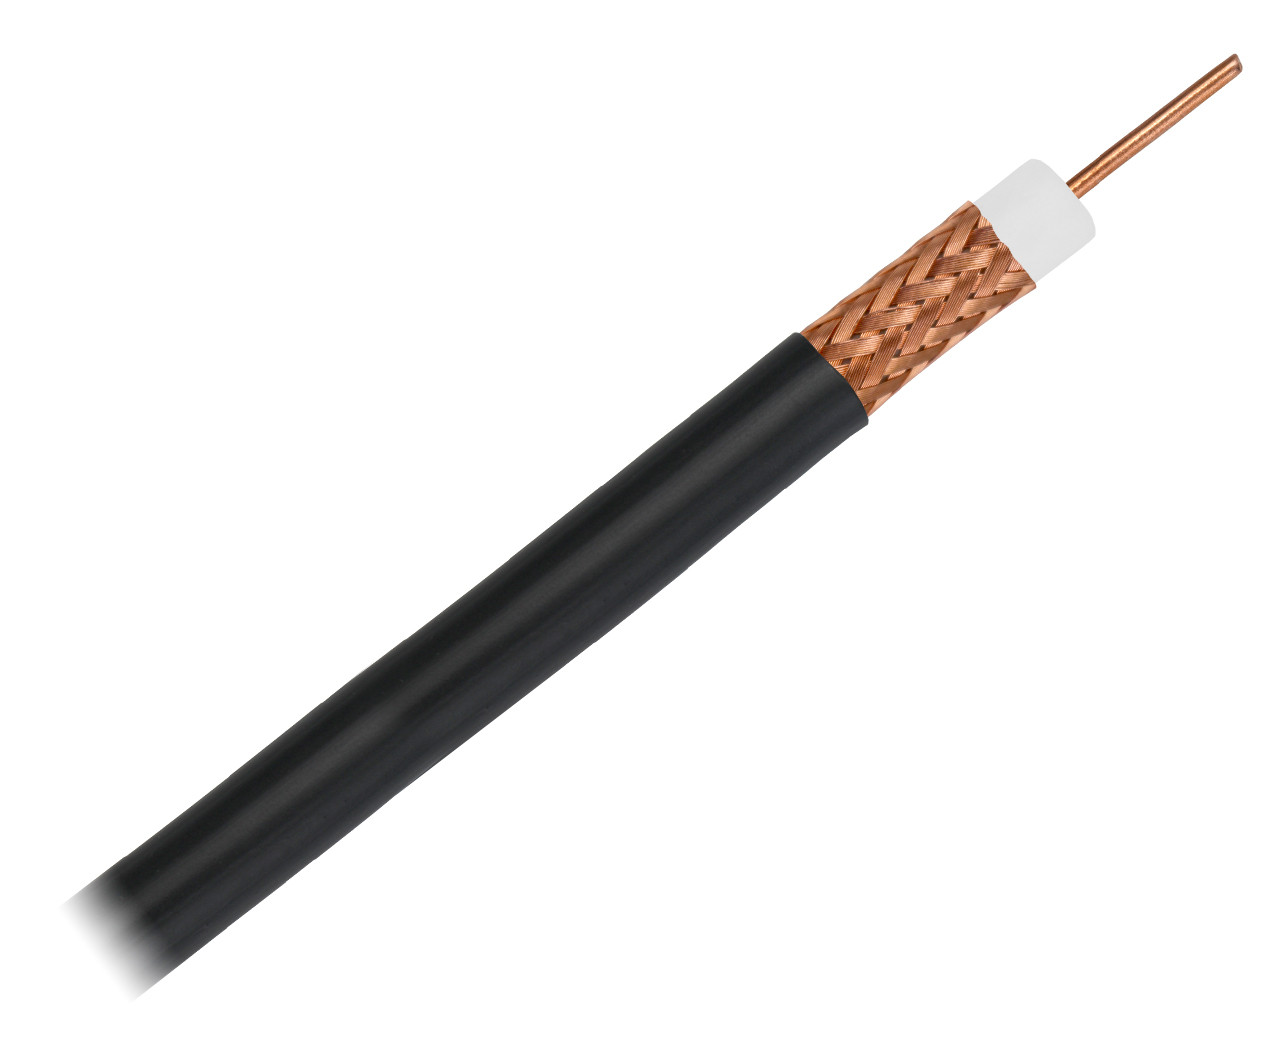 SeaMAX RG11U coaxial cable